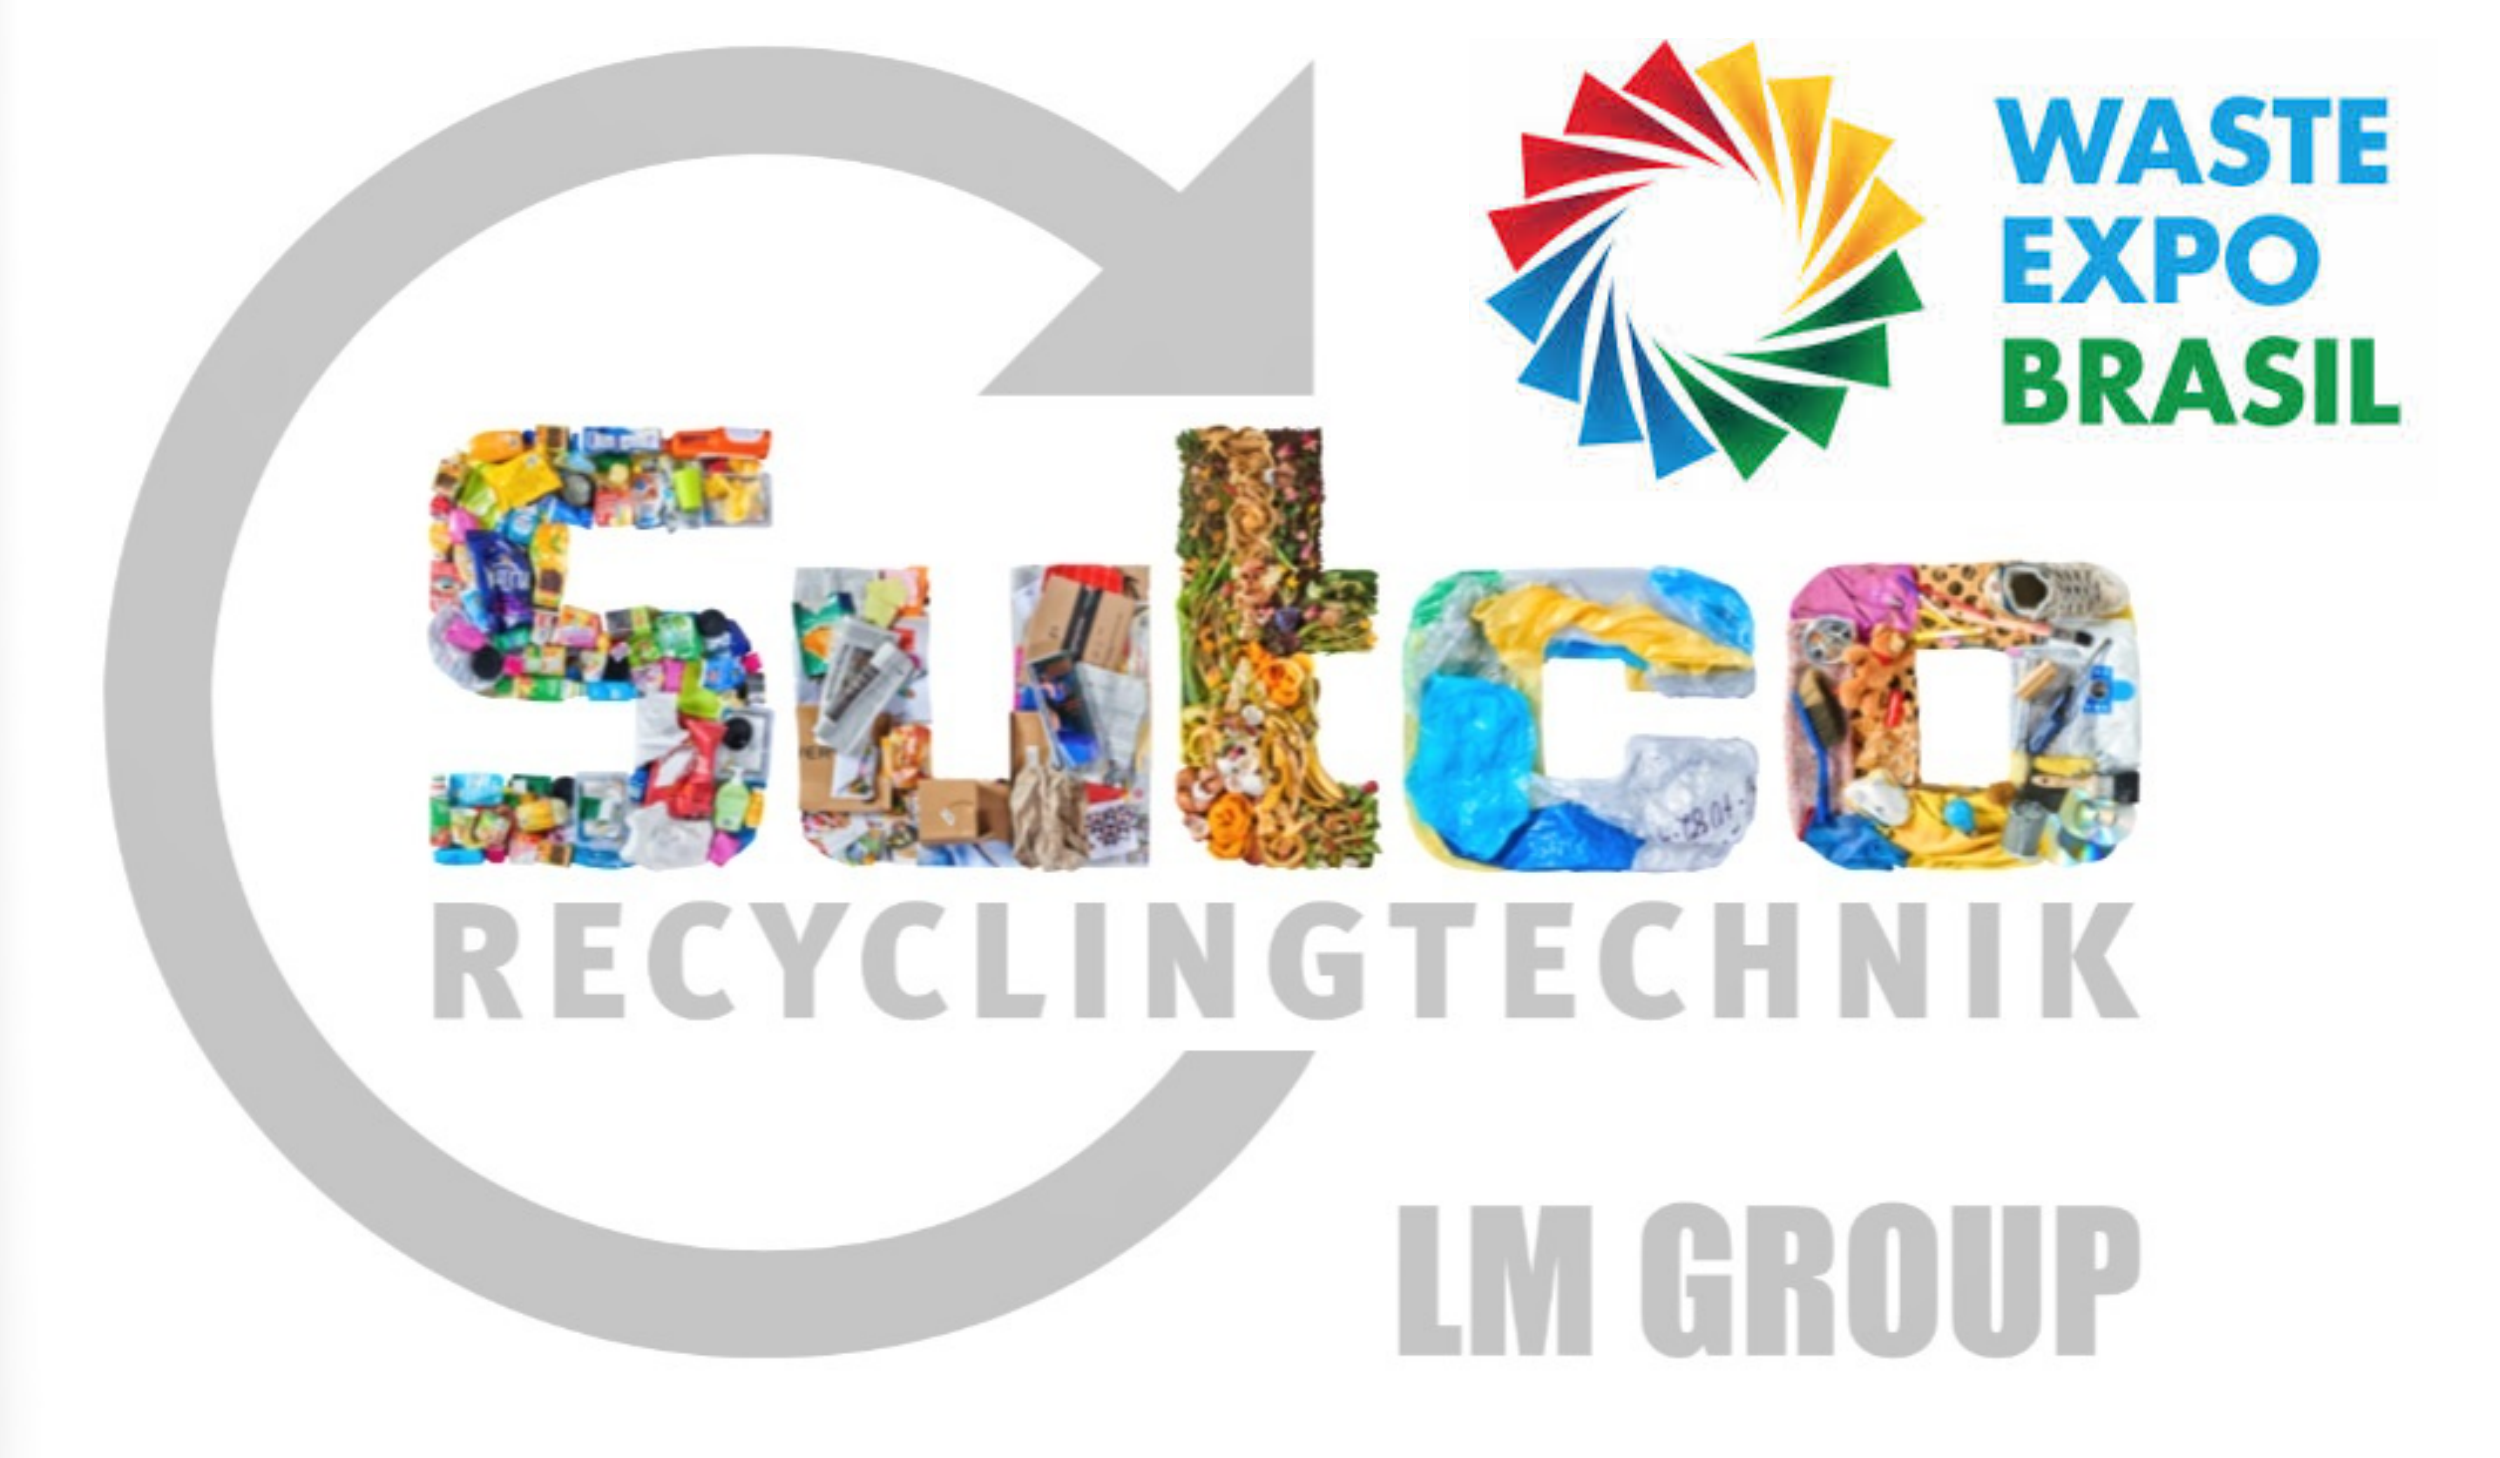 SUTCO Recycling Technik: empresa global alemã apresenta soluções técnicas para tratamento de Resíduos Sólidos na Waste Expo Brasil